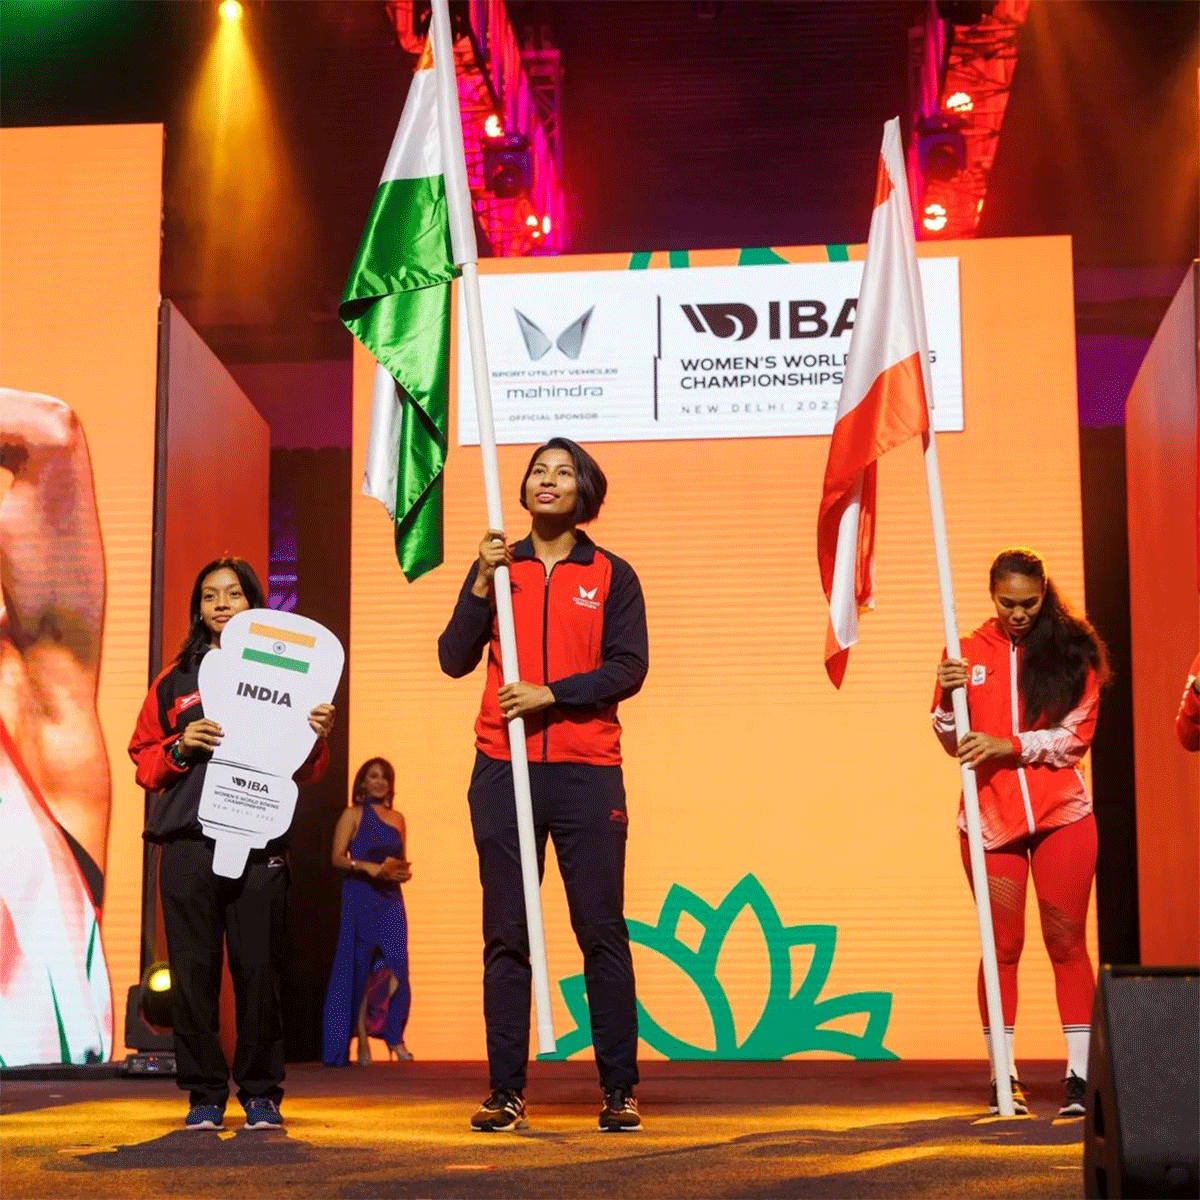 Tokyo Olympics medallist Lovlina Borgohain is India's flag bearer at the IBA Women's World Championship in New Delhi on Wednesday